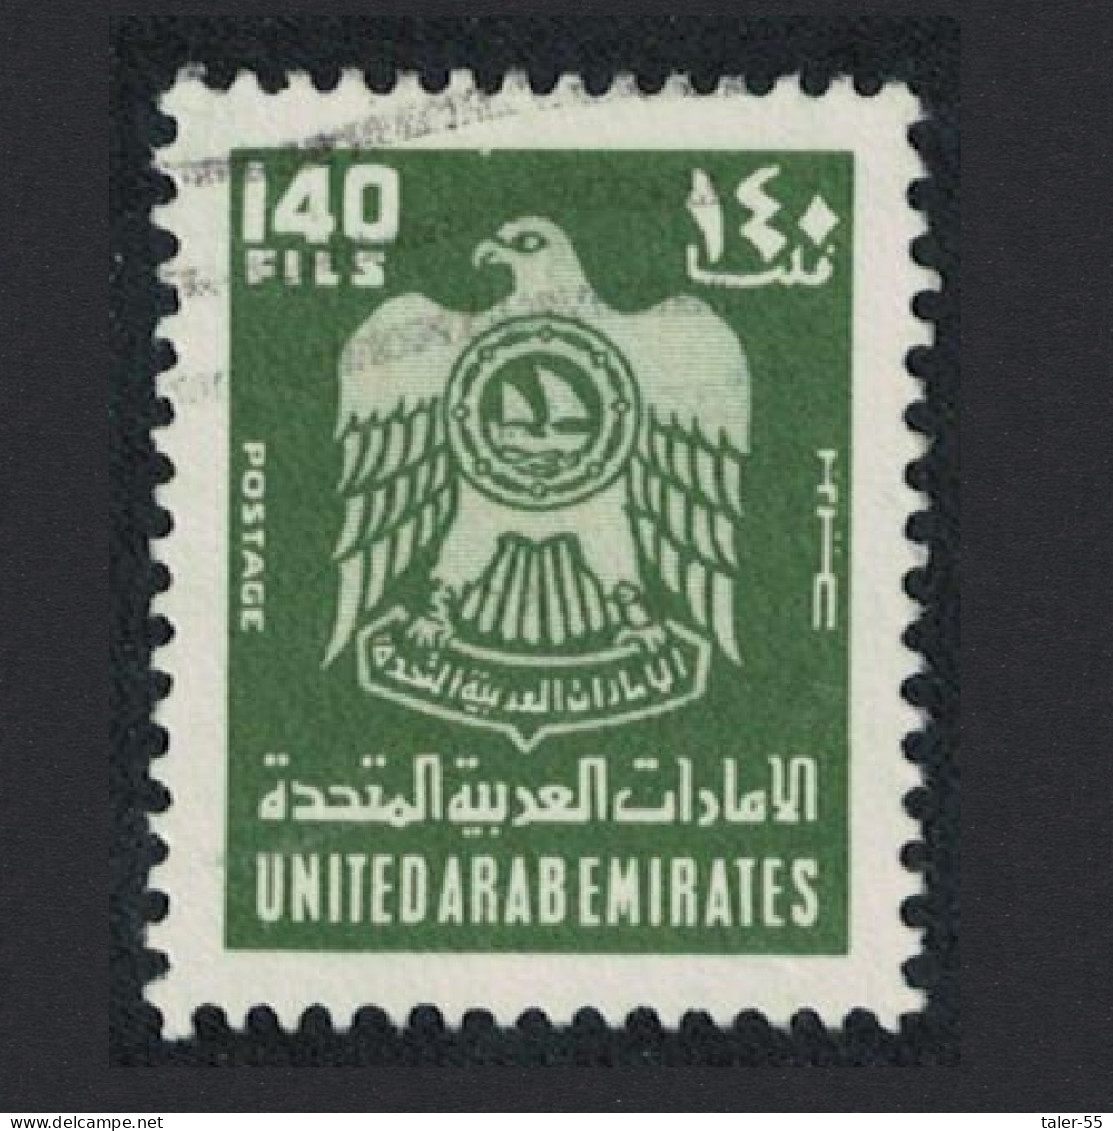 United Arab Emirates Crest Bird 140 Fils 1976 MNH SG#66 MI#66 - United Arab Emirates (General)